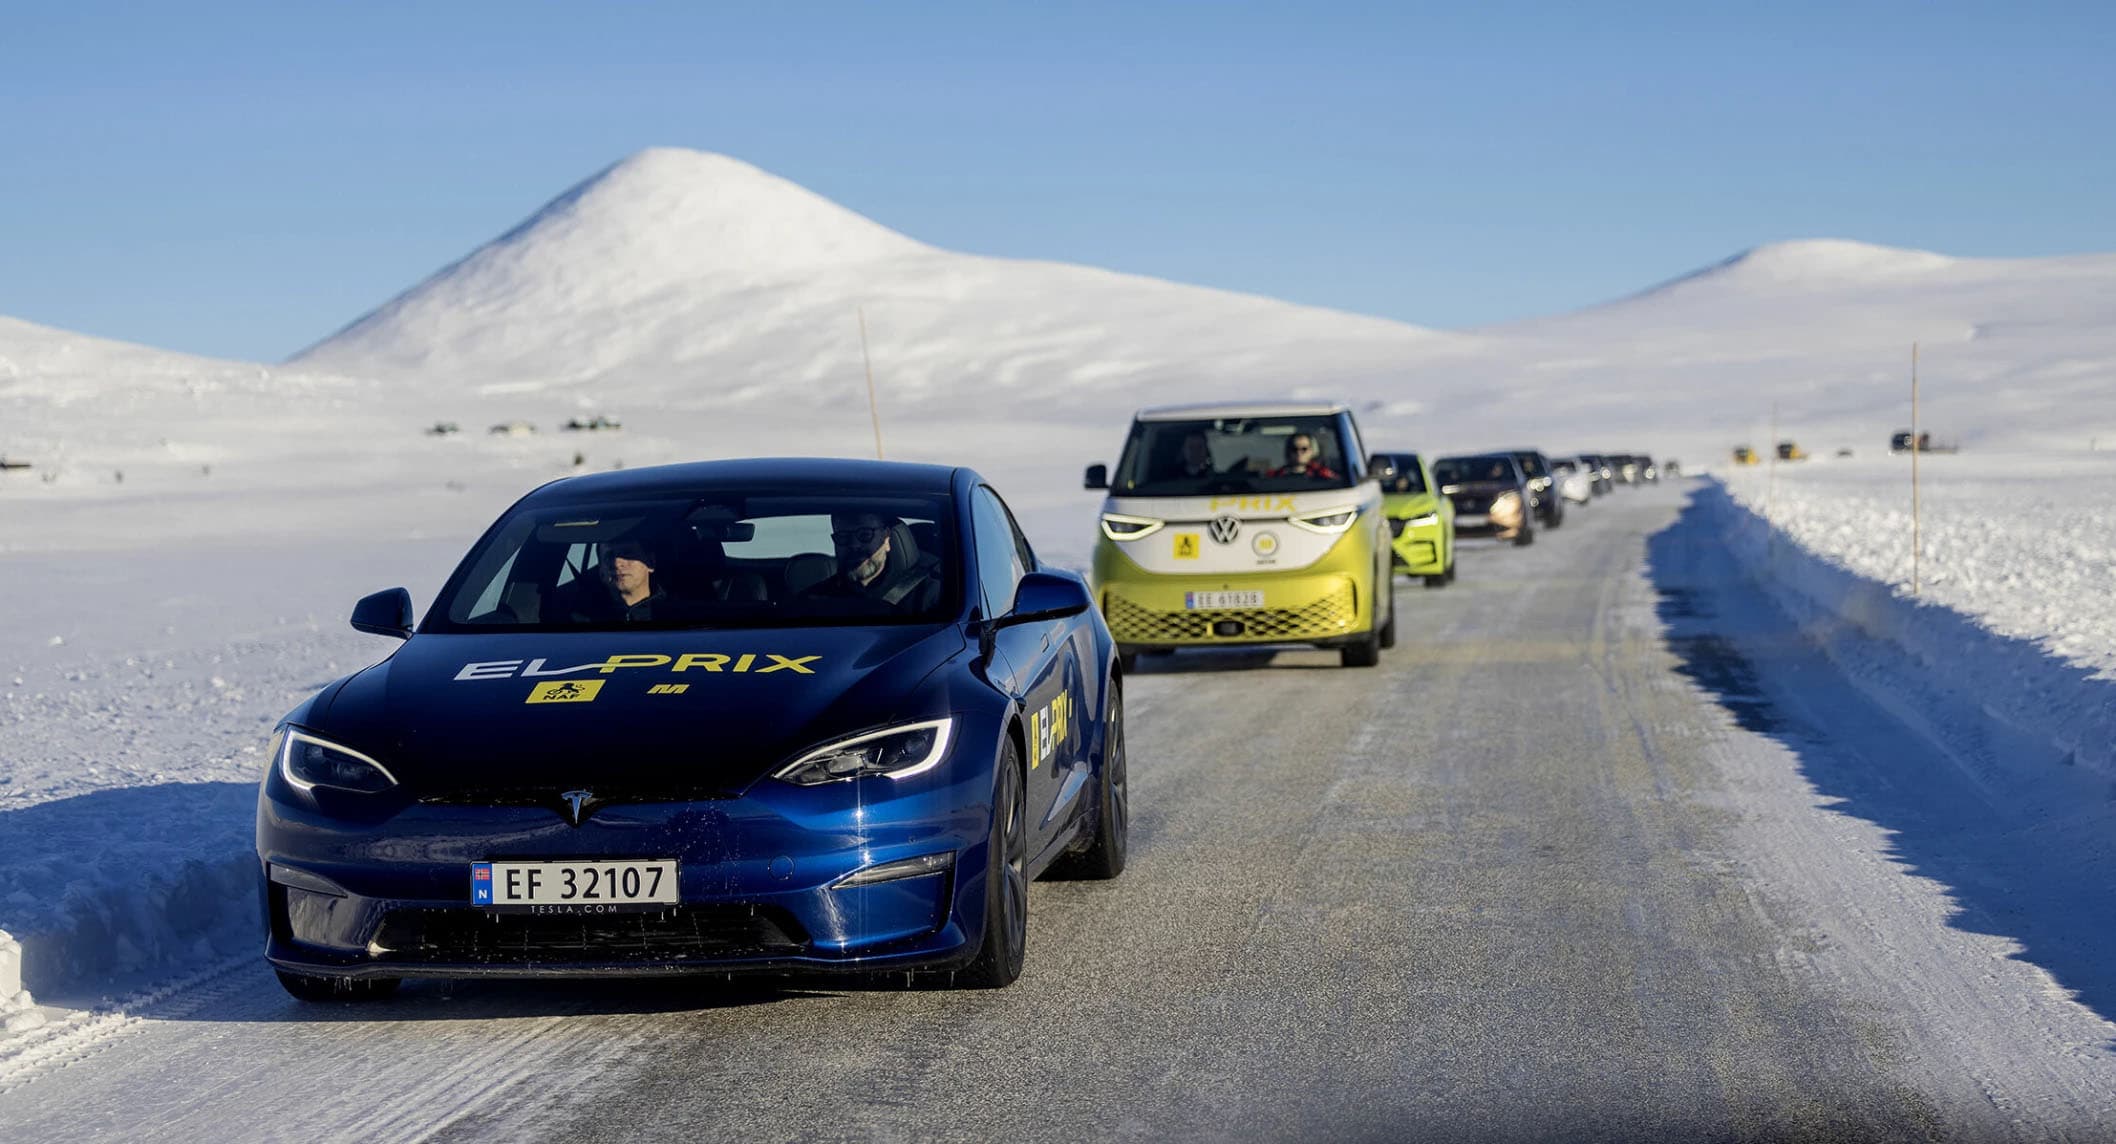 29 elektromobilov v zimnom teste ukázalo svoj dojazd.